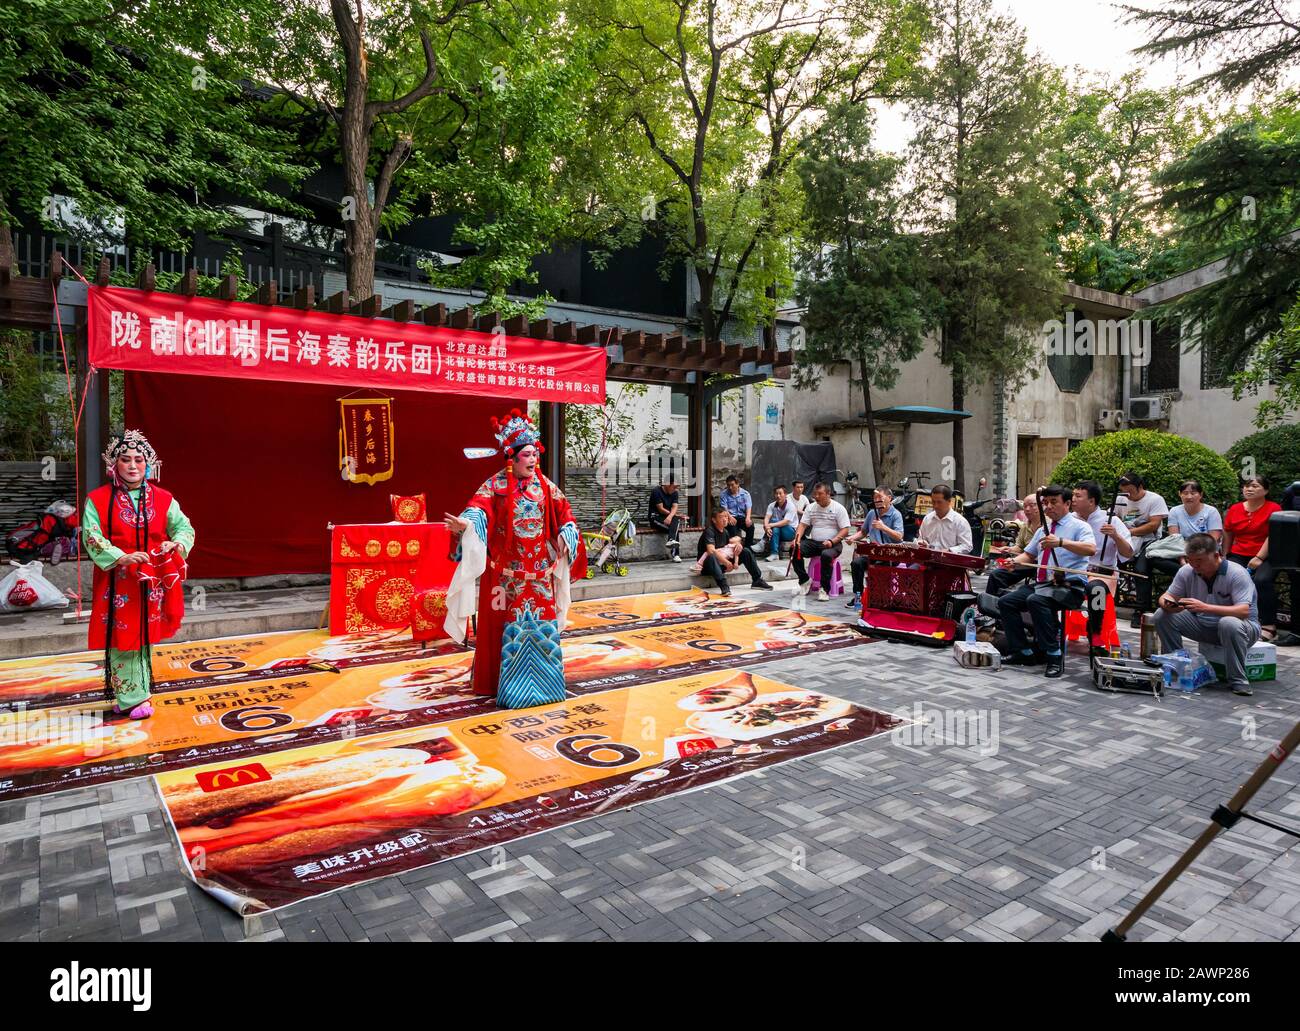 Men performing outdoor Peking opera in colourful costumes, Xi Cheng Hutong District, Beijing, China. Asia Stock Photo